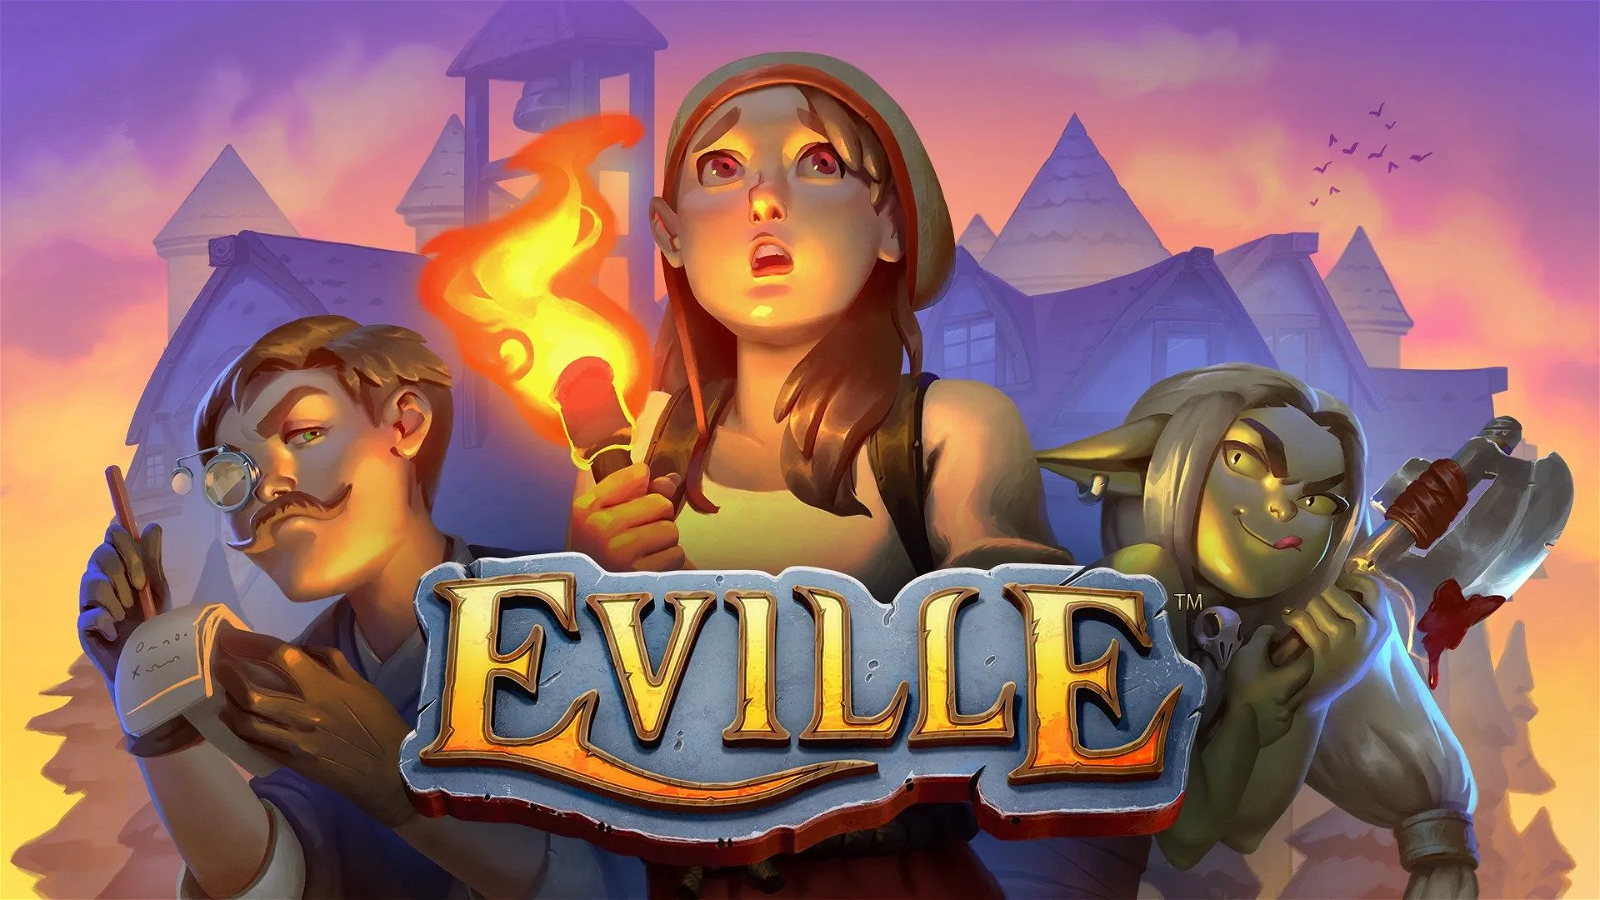 Eville_juego-game-pass